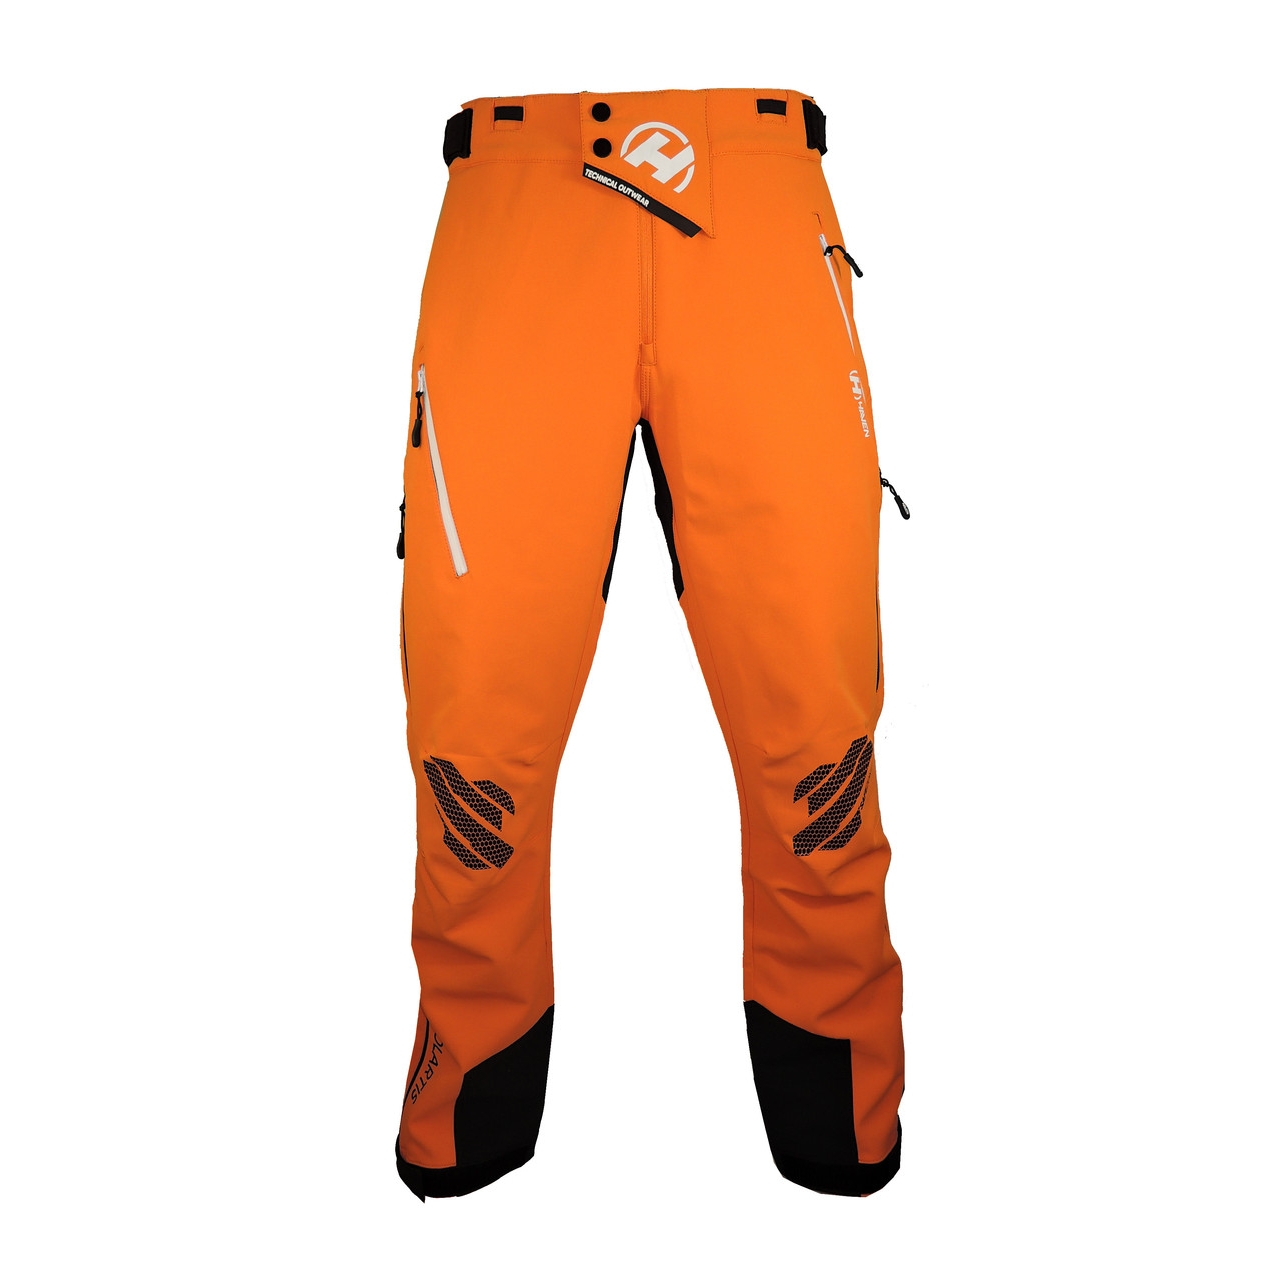 Kalhoty pánské Haven Polartis - oranžové, XL